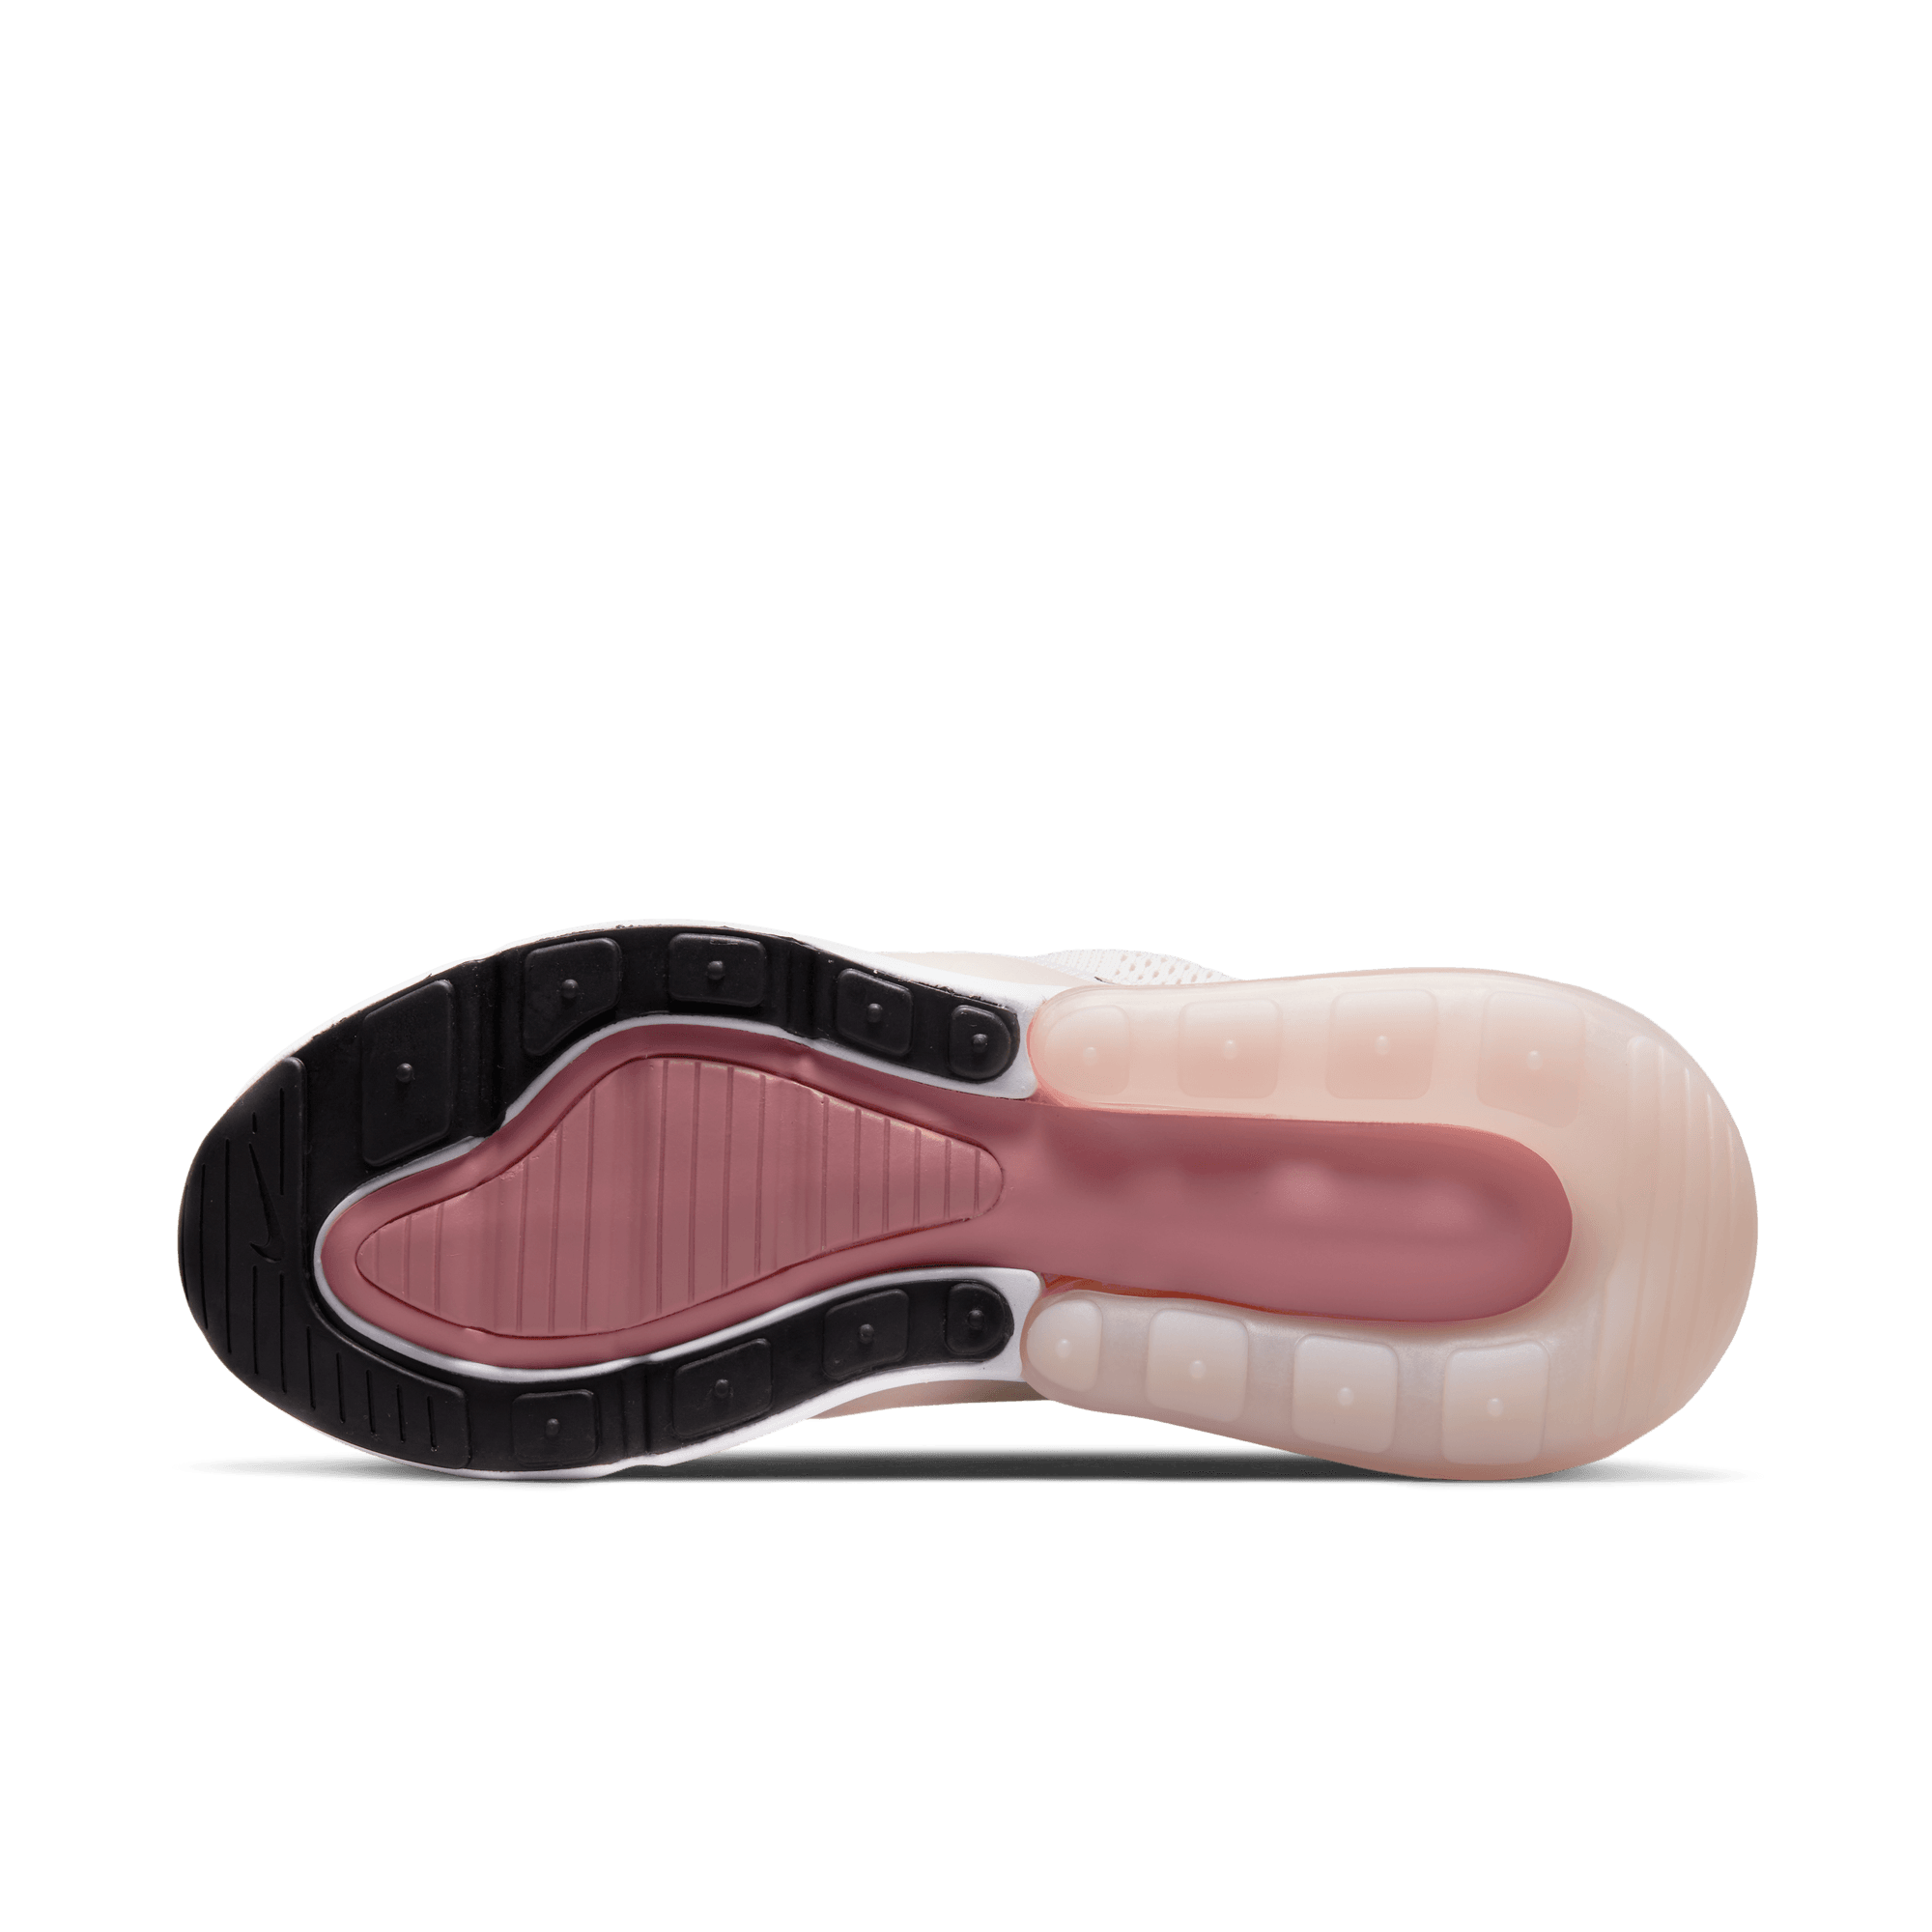 Nike FOOTWEAR Nike Air Max 270 Light Soft Pink - Women's